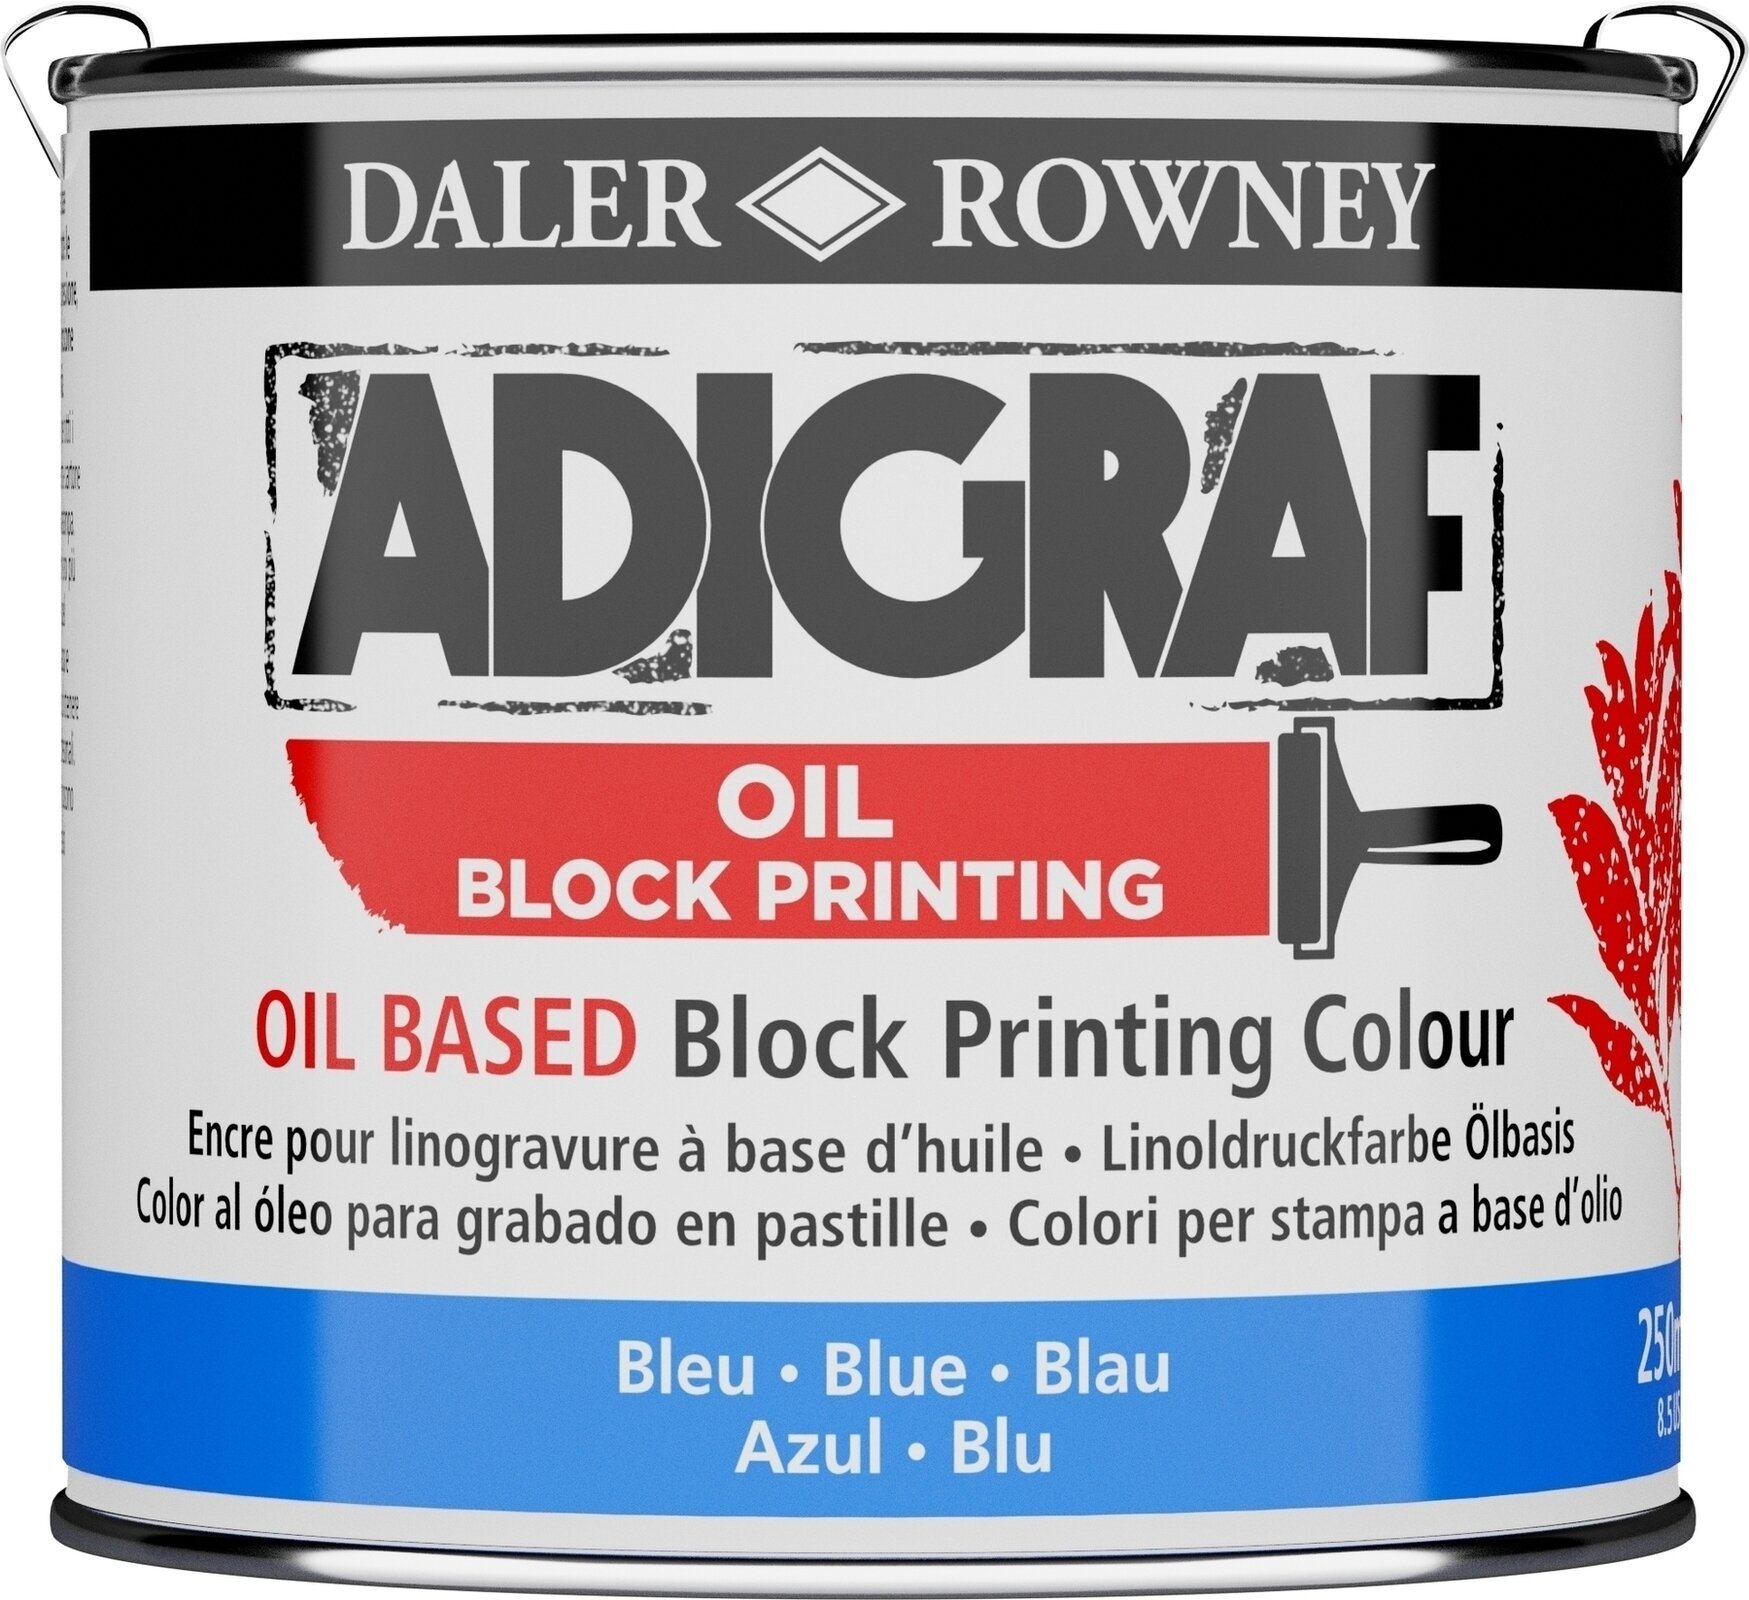 Tinta para linogravura Daler Rowney Adigraf Block Printing Oil Tinta para linogravura Blue 250 ml